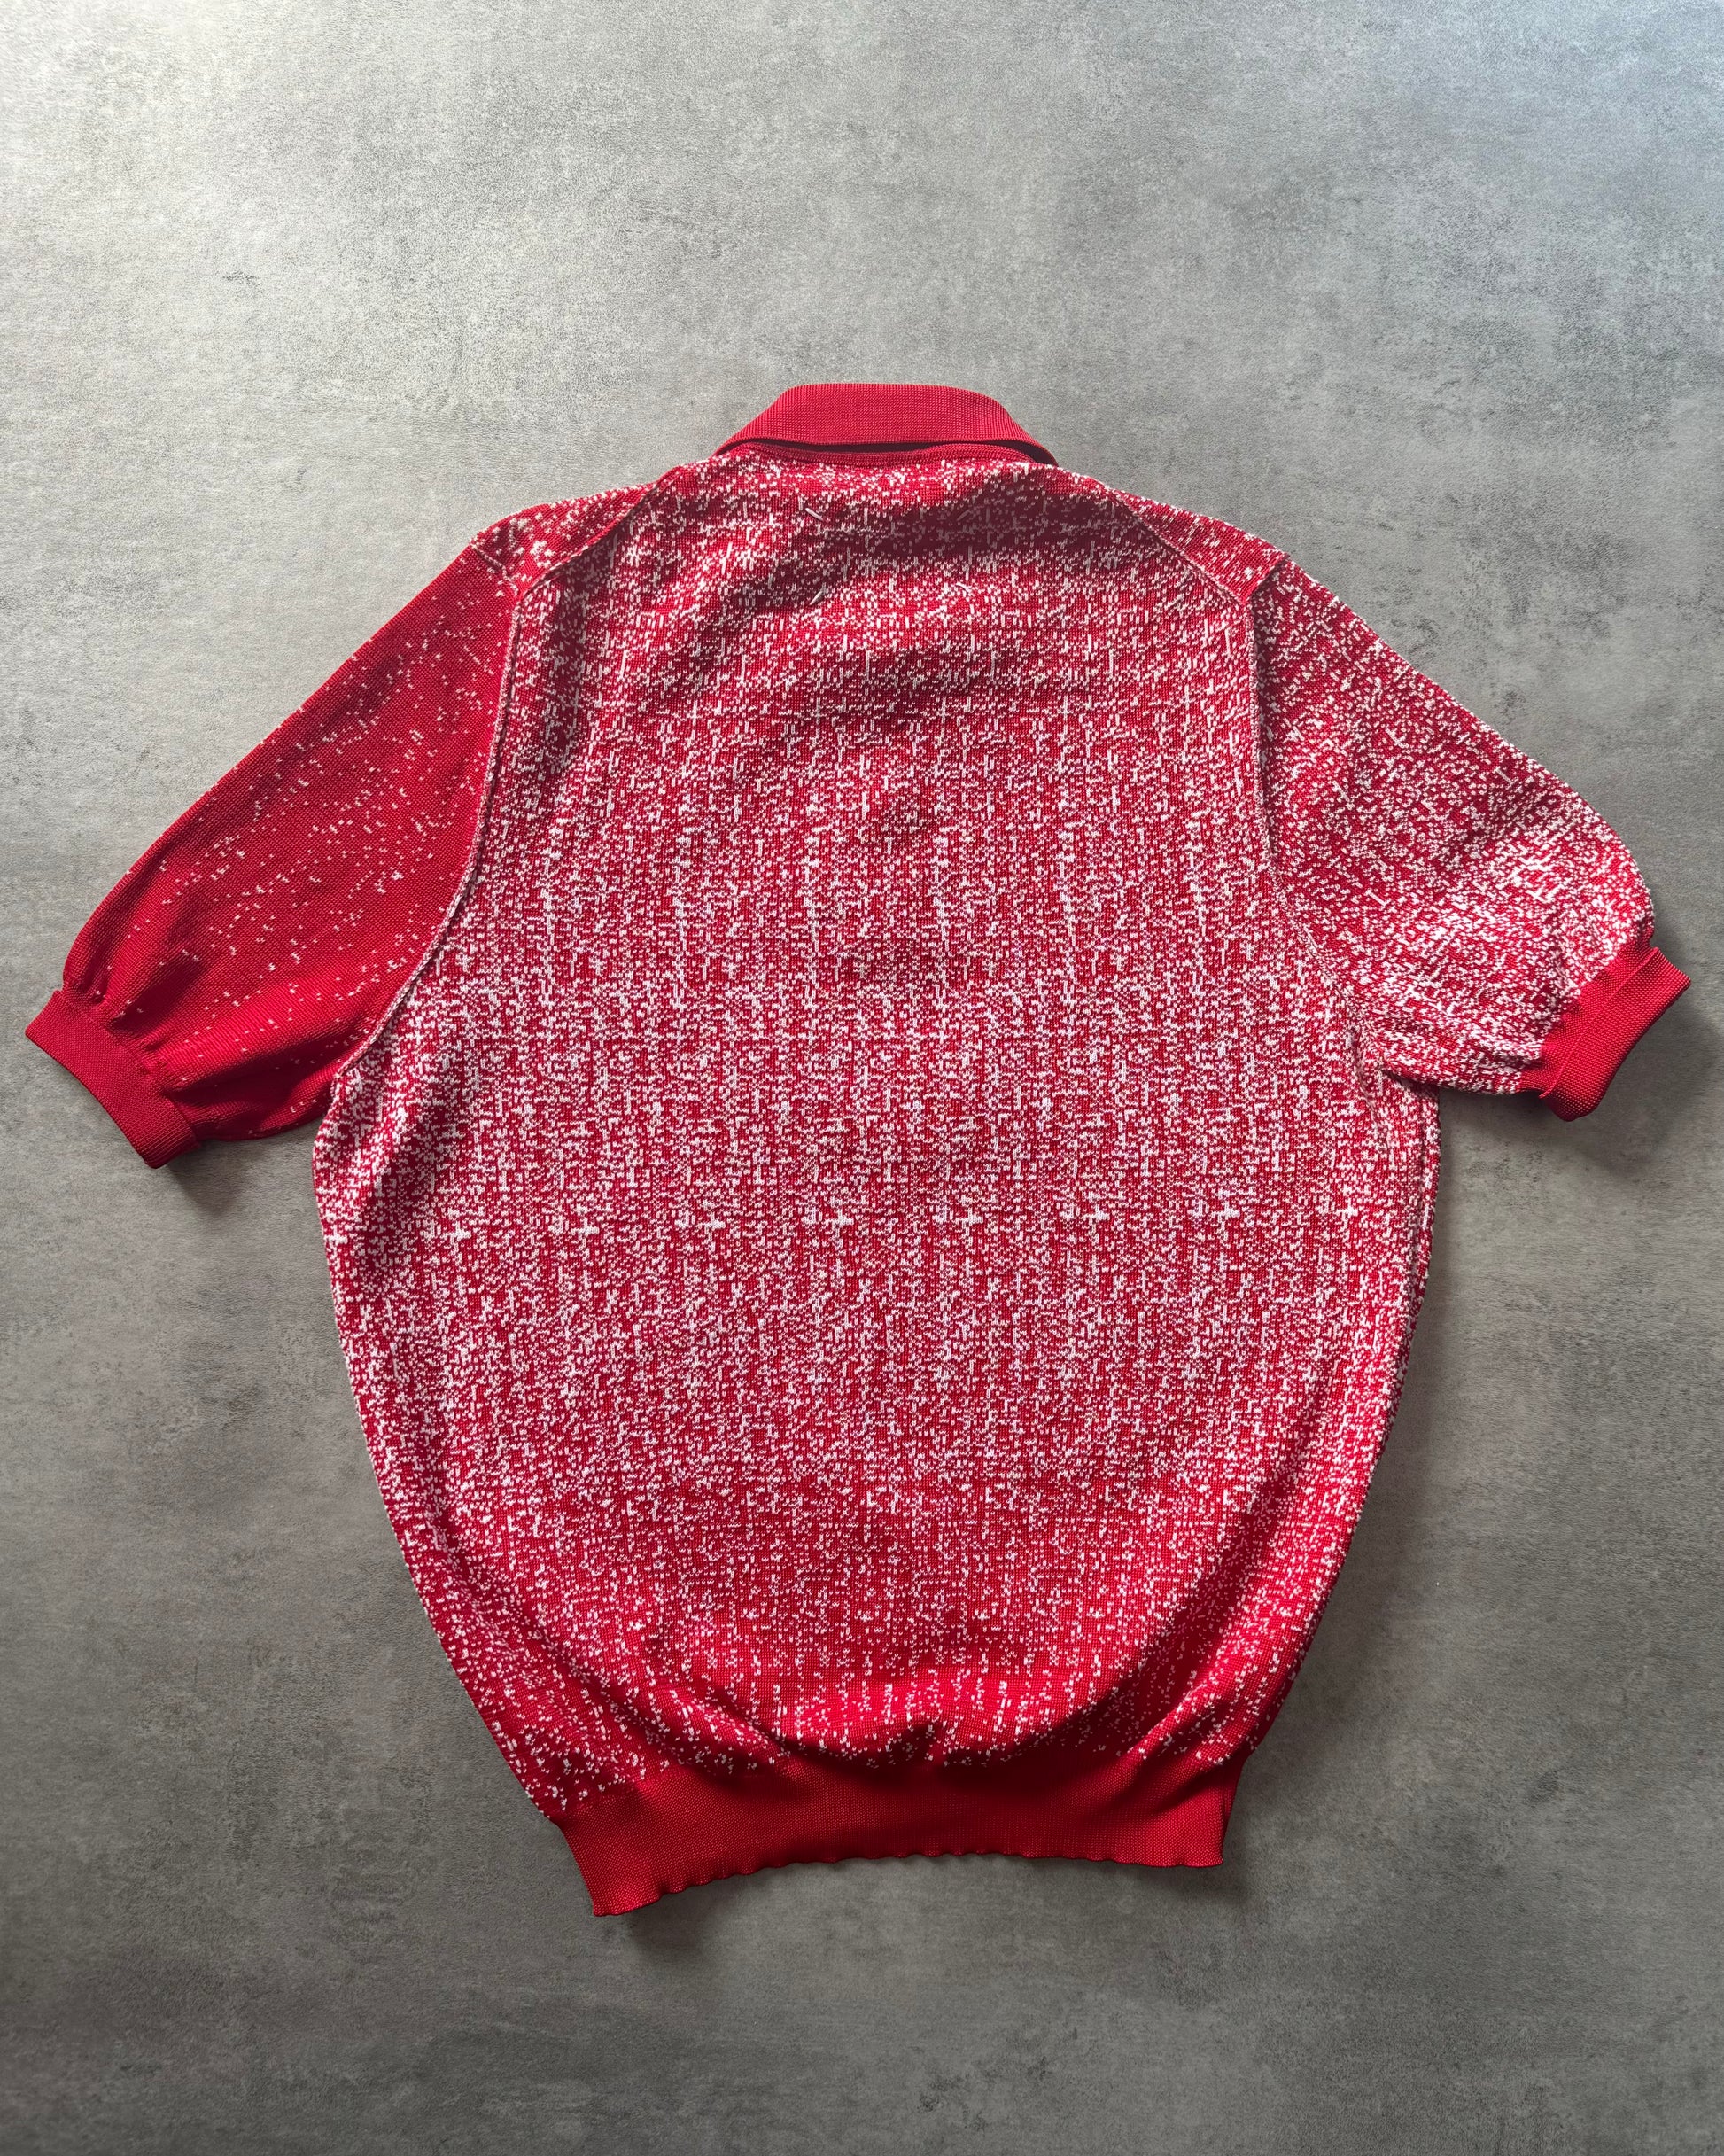 SS2017 Maison Margiela Pixelized Red Human Polo Shirt (S) - 7